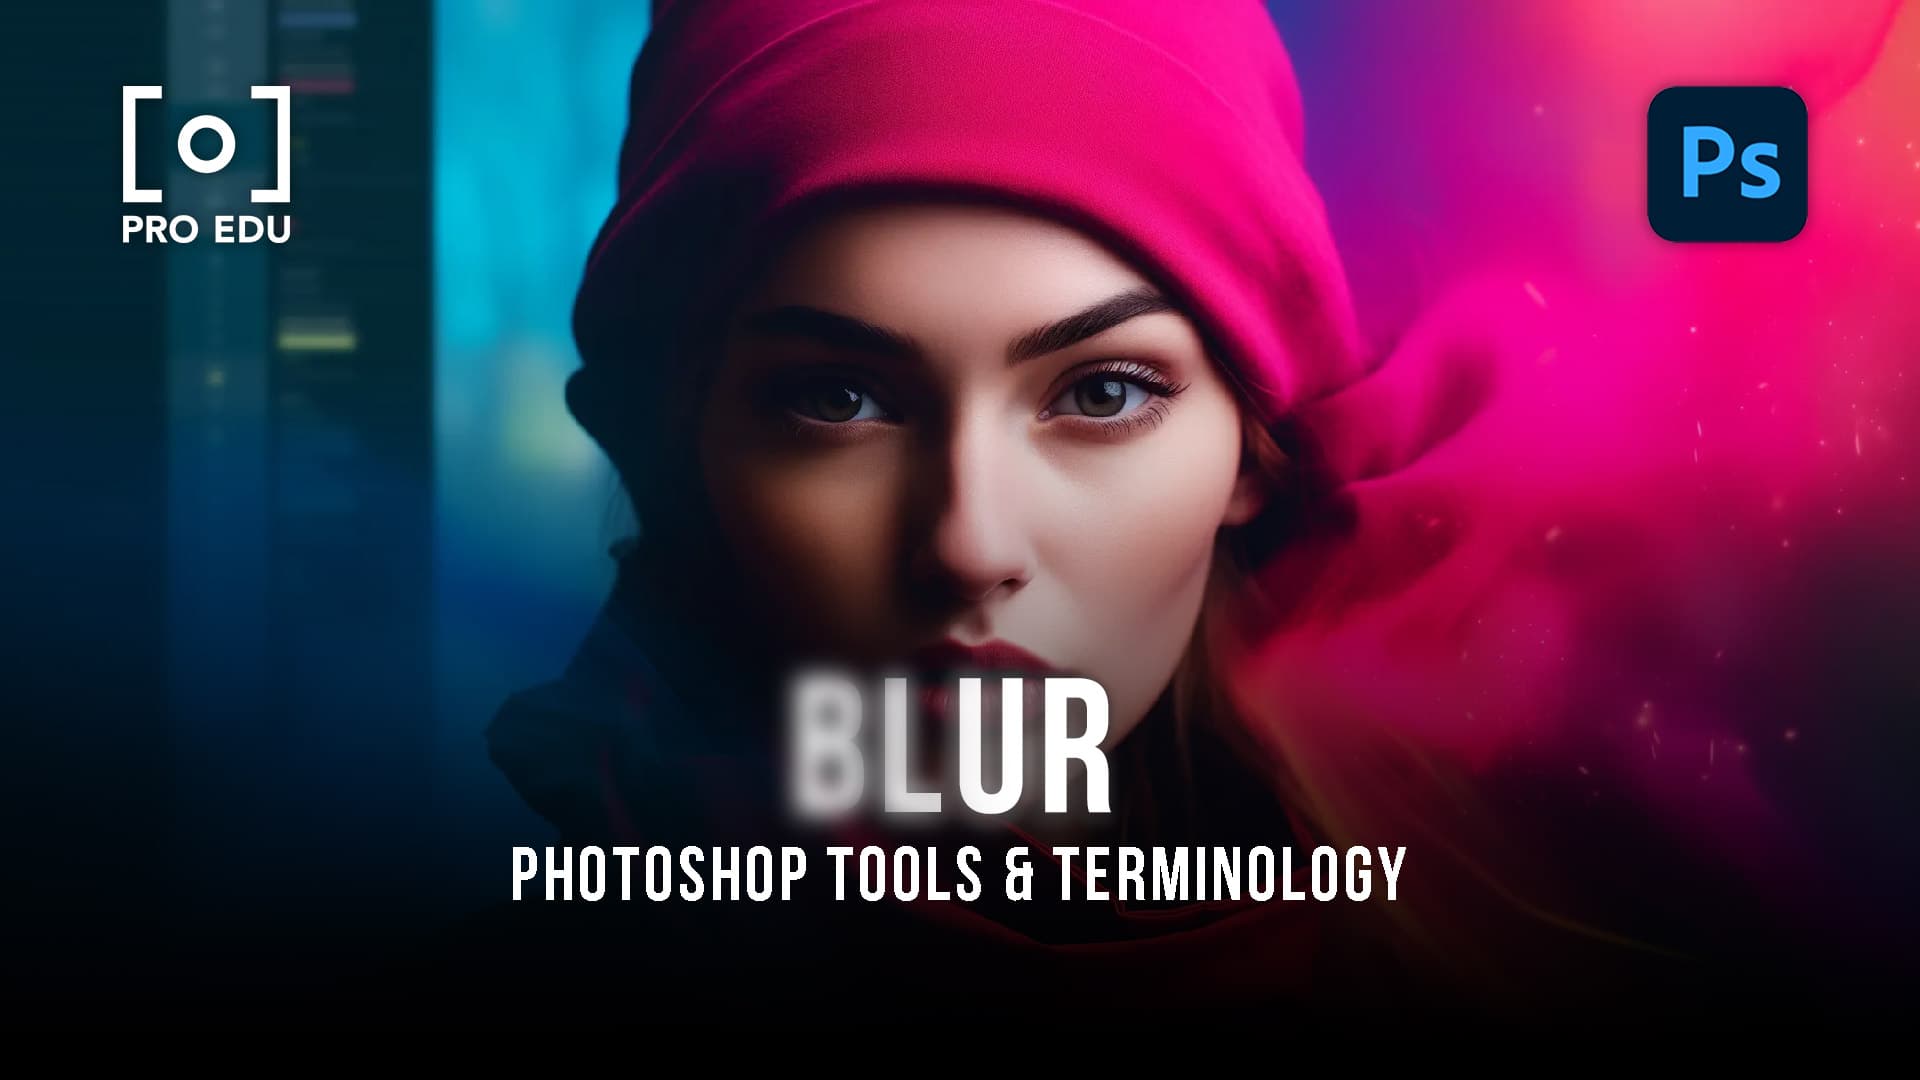 Blur Effects in Photoshop - PRO EDU Tutorial